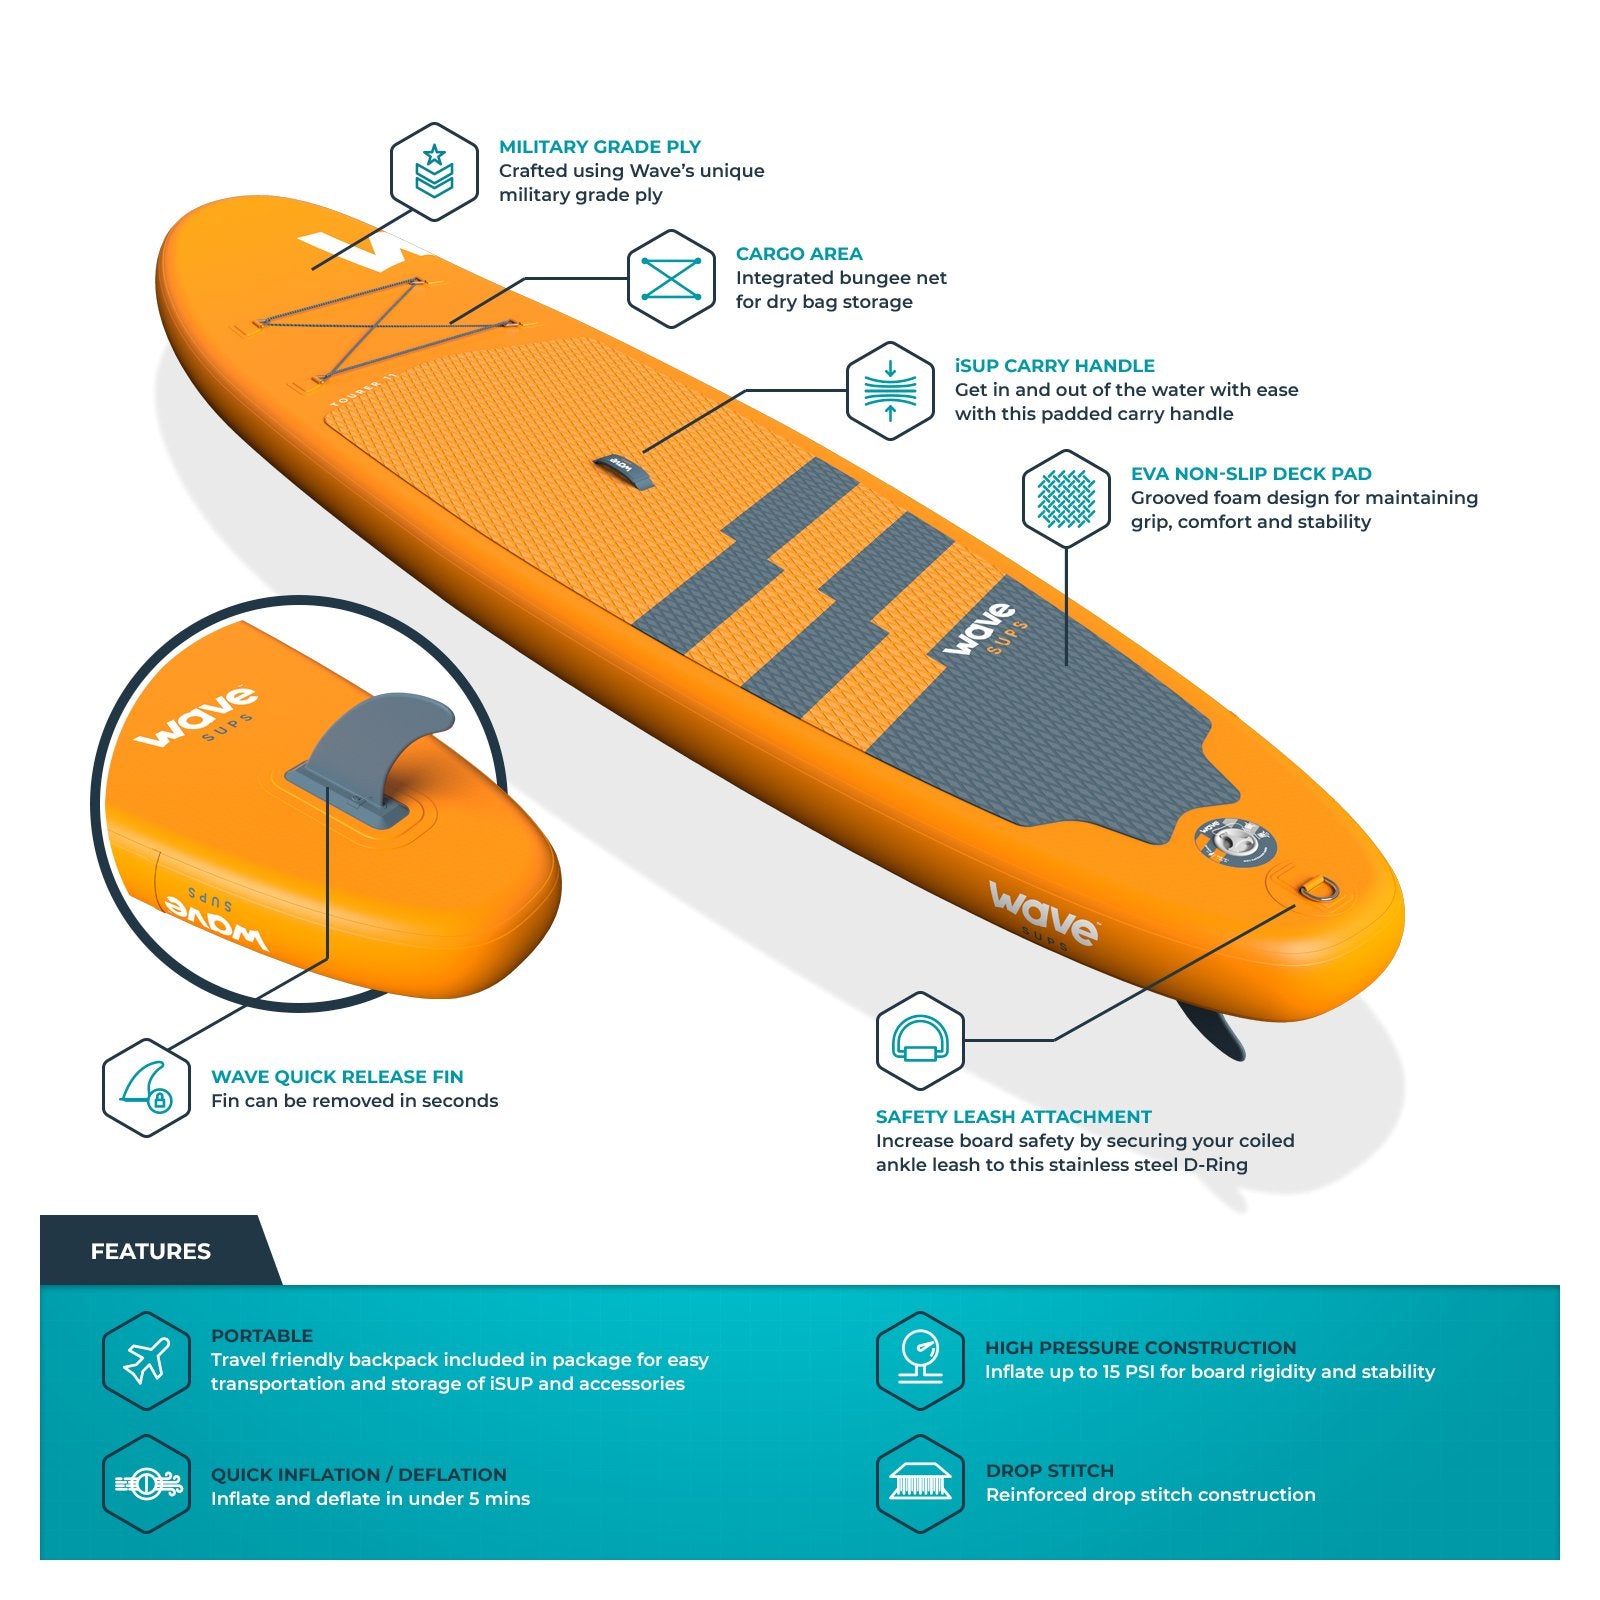 Tourer SUP | Inflatable Stand-Up Paddleboard | 10/11ft | Orange - Wave Sups EU